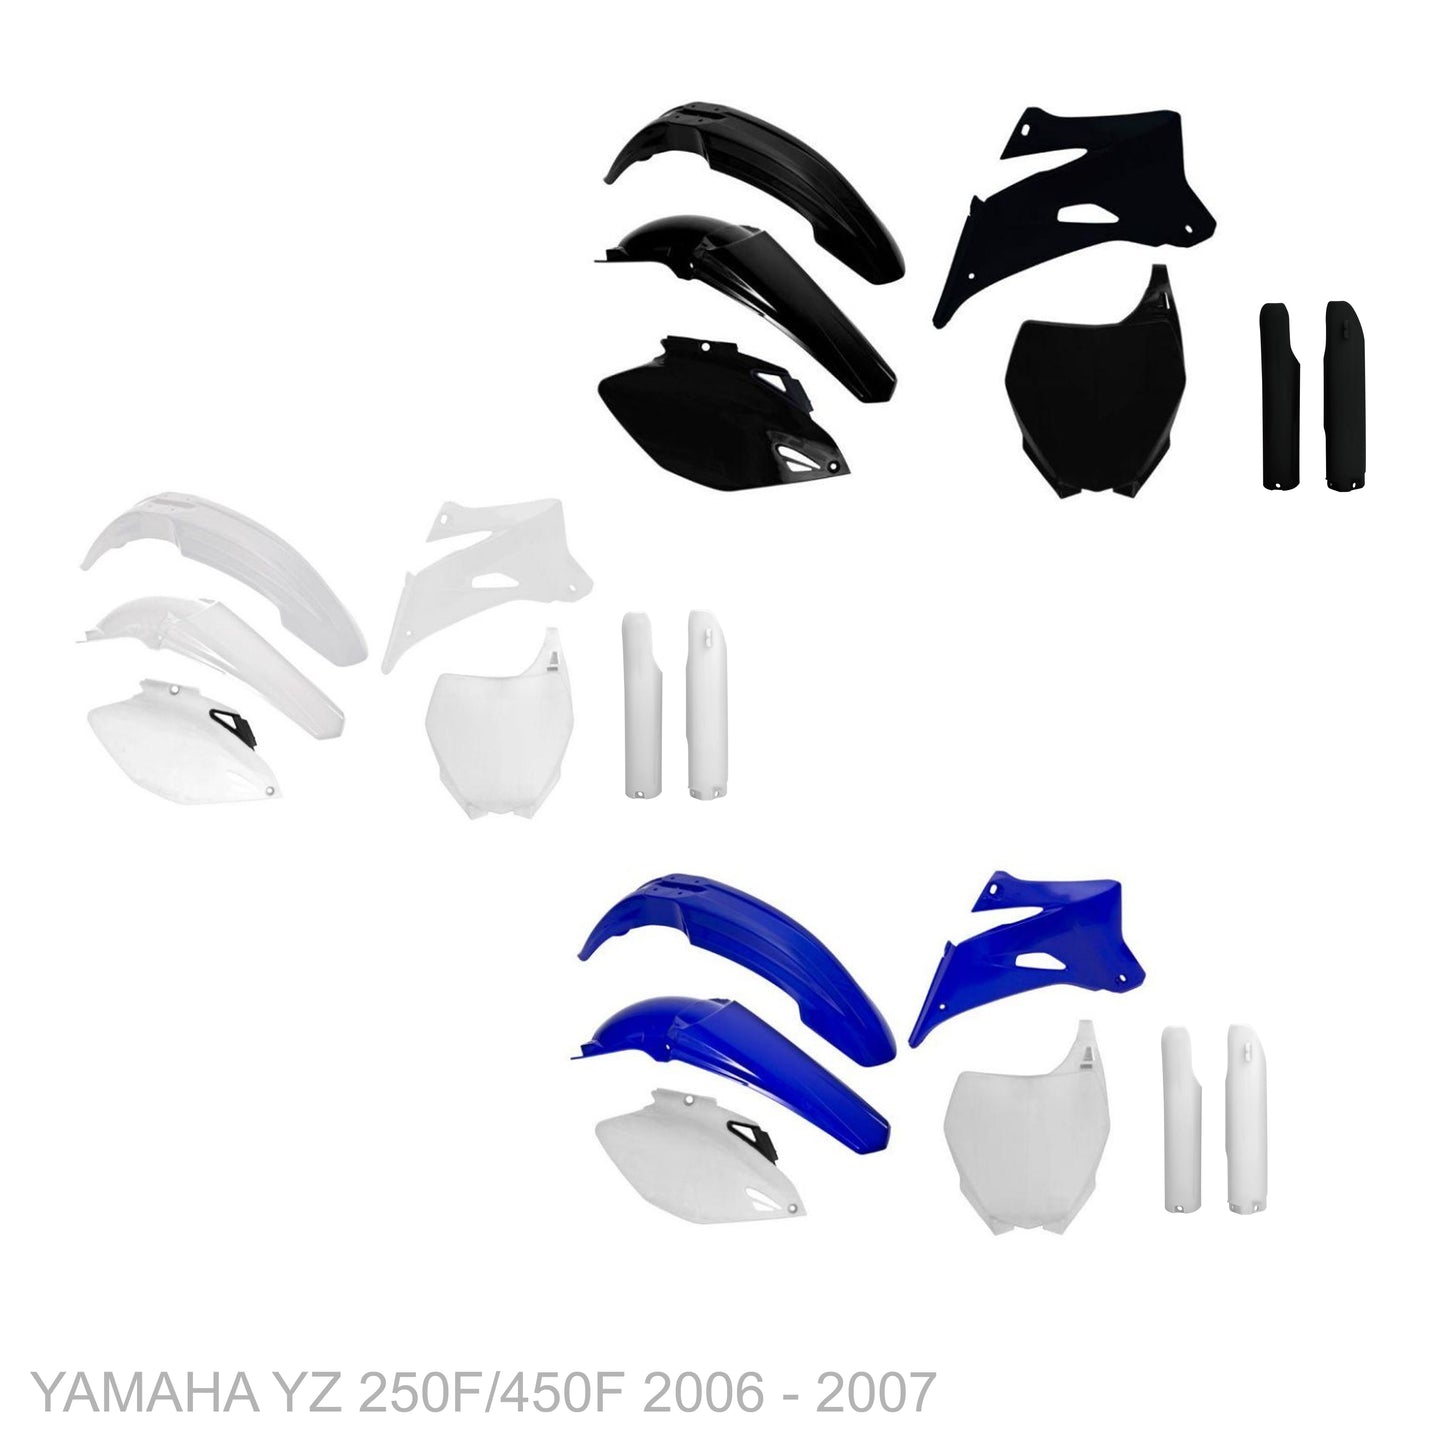 YAMAHA YZ 450F 2006 - 2007 Start From Scratch Graphics Kits